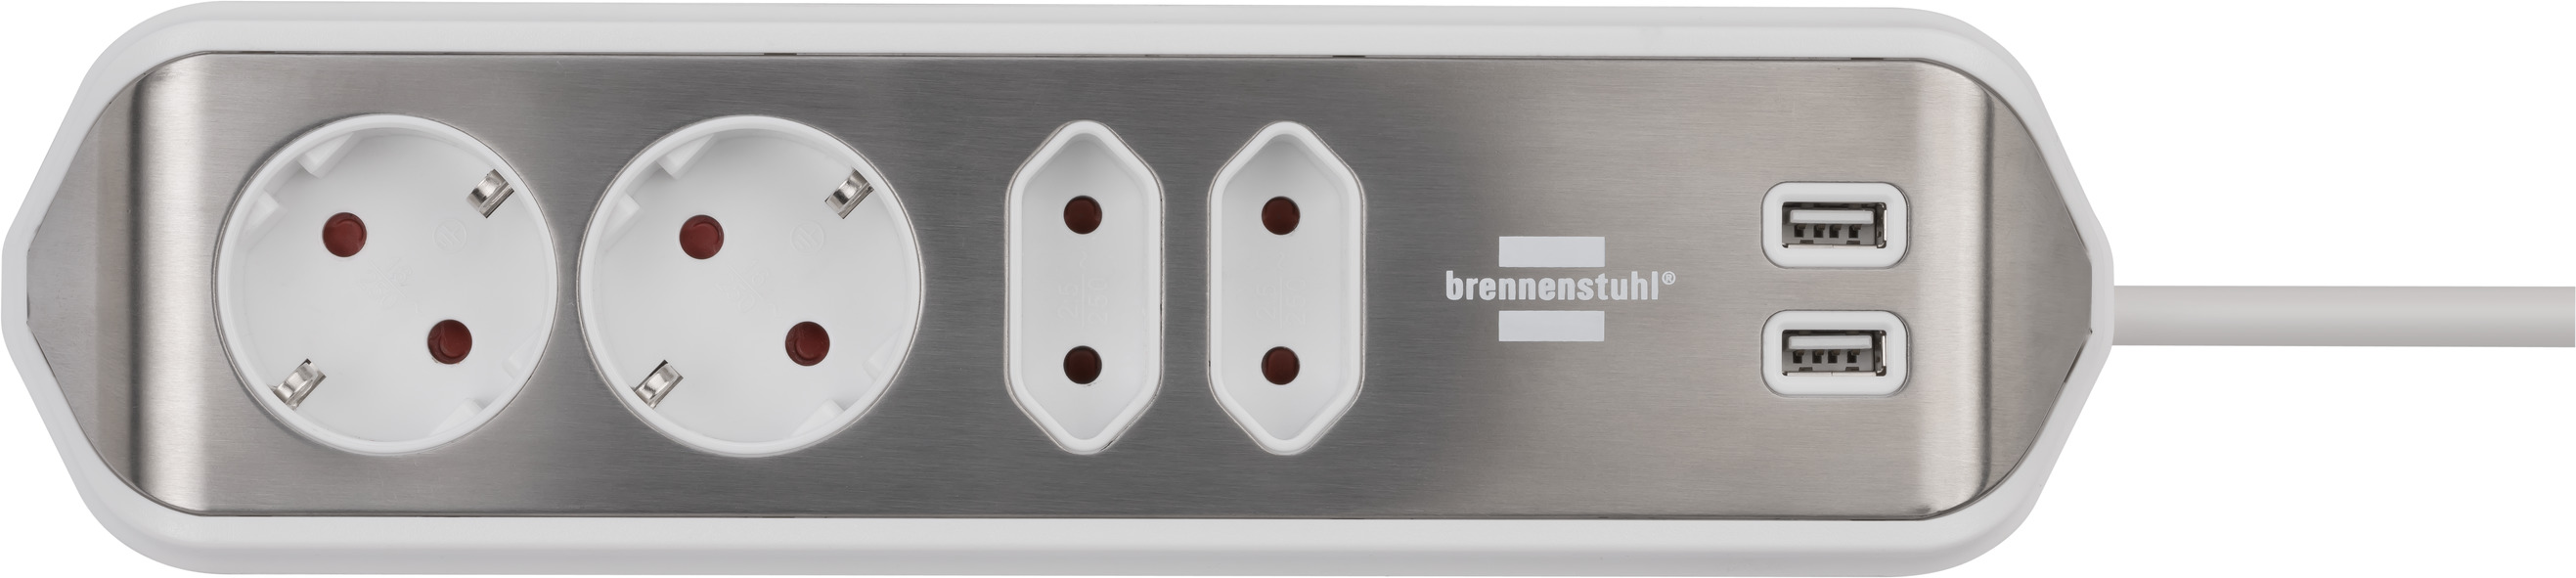 brennenstuhl®estilo regleta de enchufes forma cúbica con 1 enchufe europeo,  2 enchufes USB con